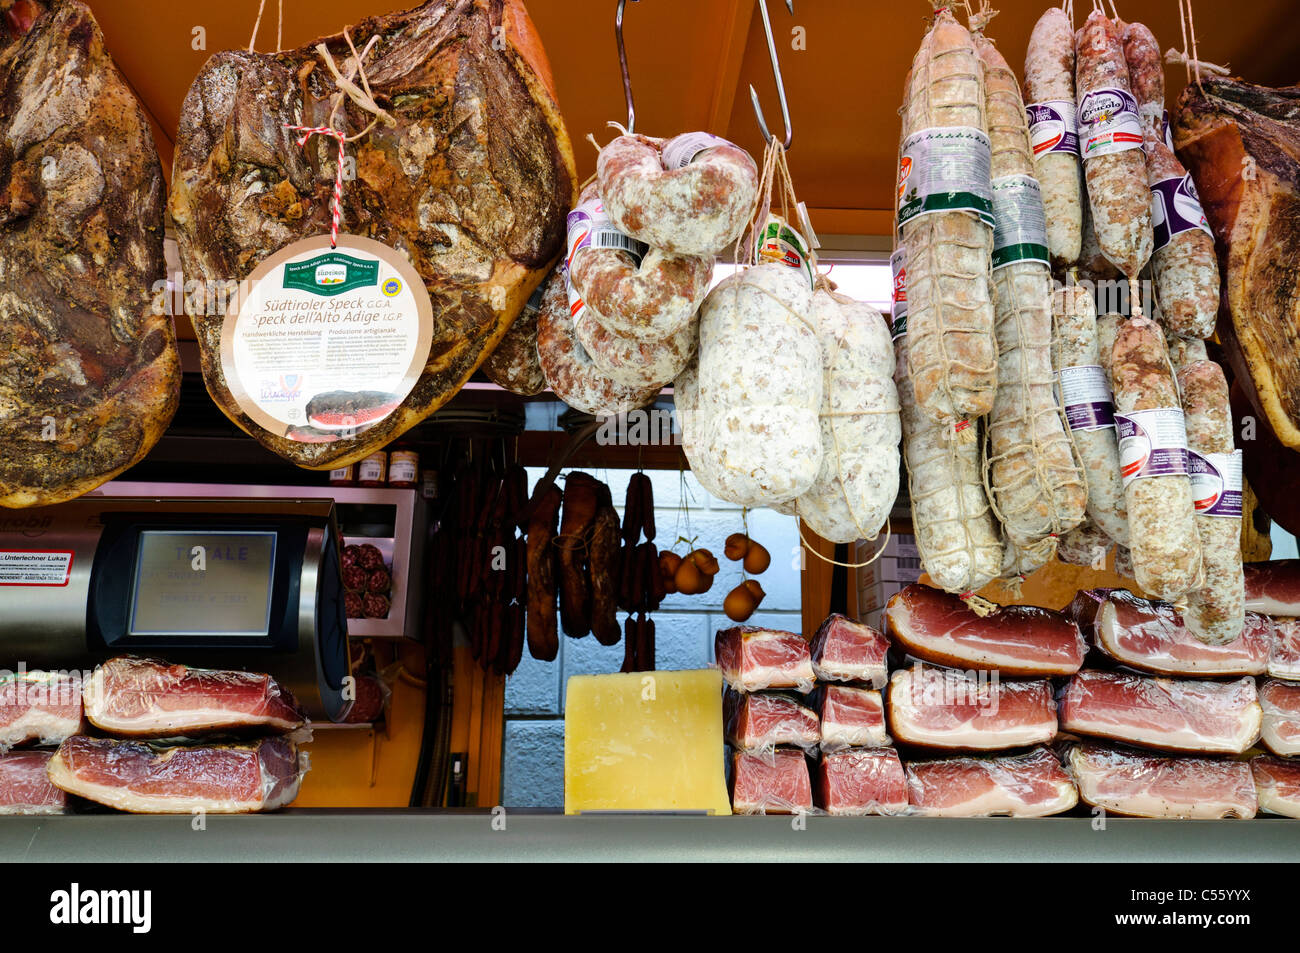 La salumeria, carne shop, street fair, Bolzano, Italia. Foto Stock